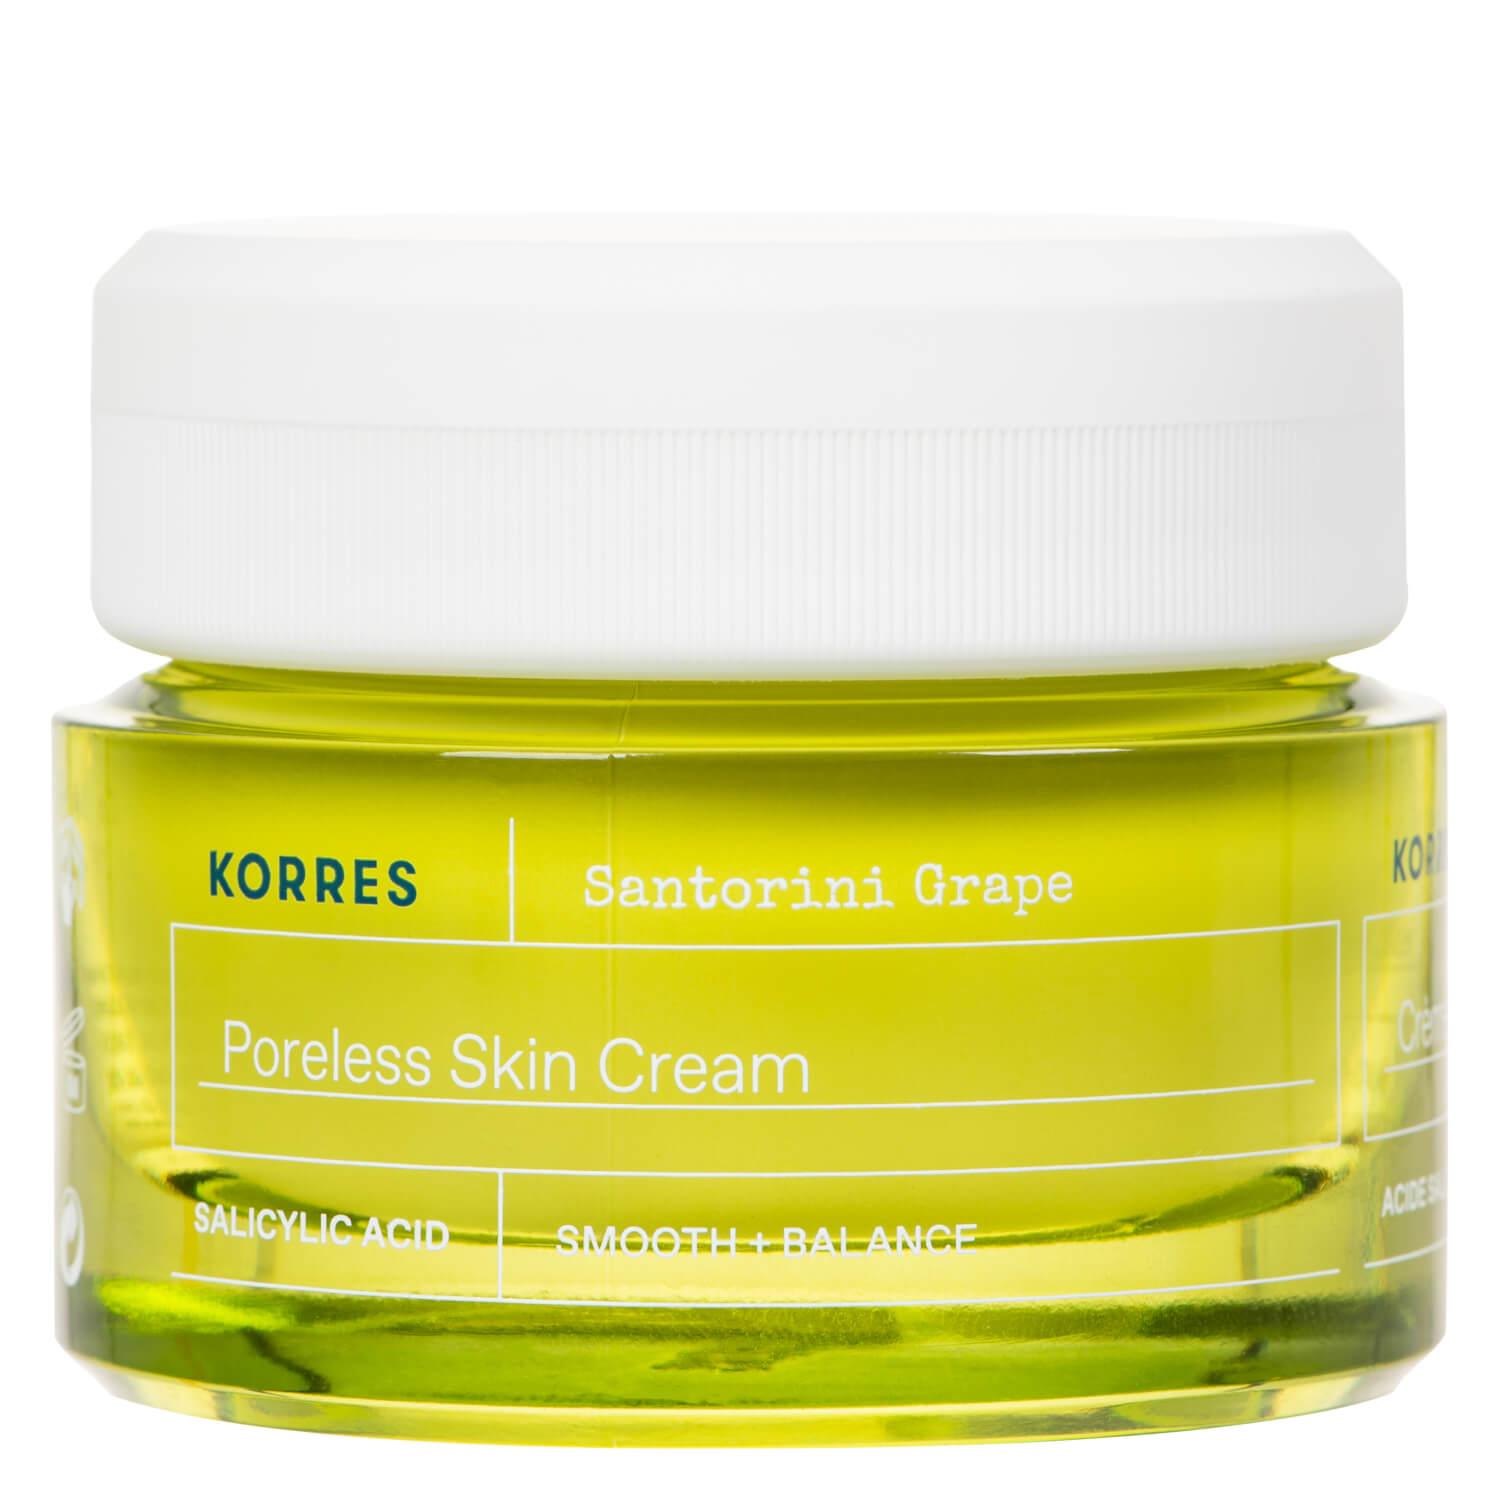 Korres Care - Santorini Grape Poreless Skin Cream